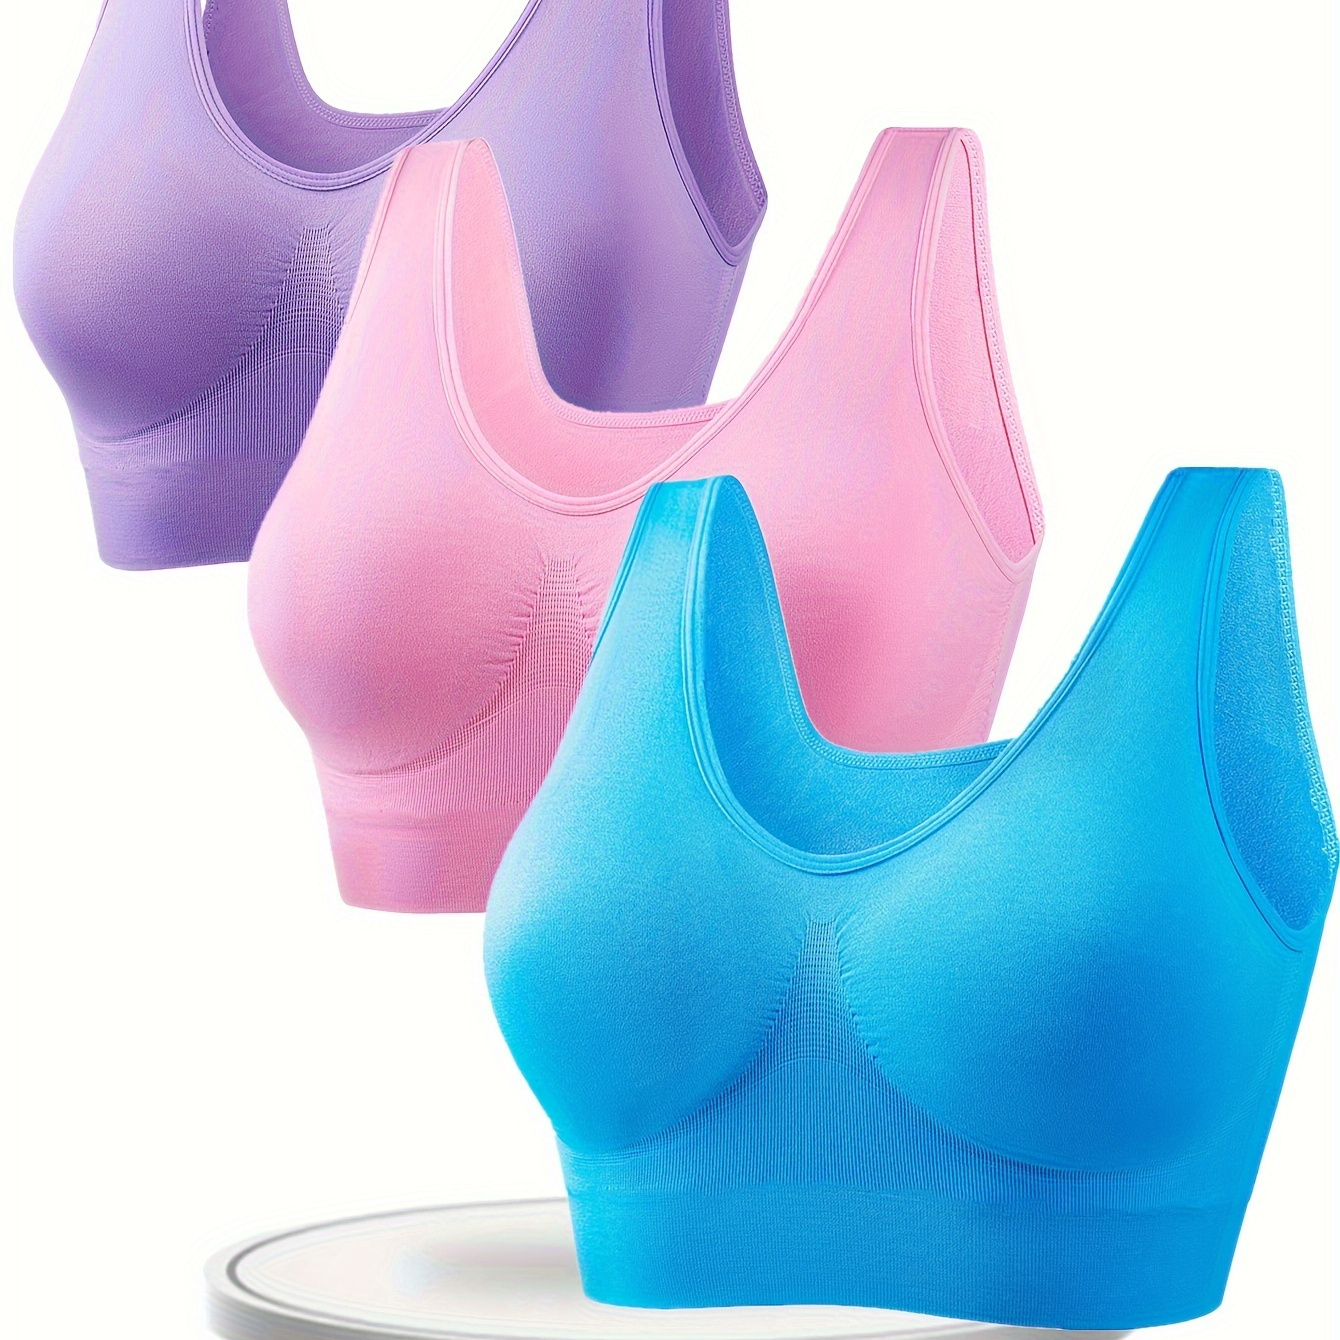 

3pcs Women's Sports Bras Set, Plus Size Solid Seamless Non Padded Wireless Yoga Running Bralette